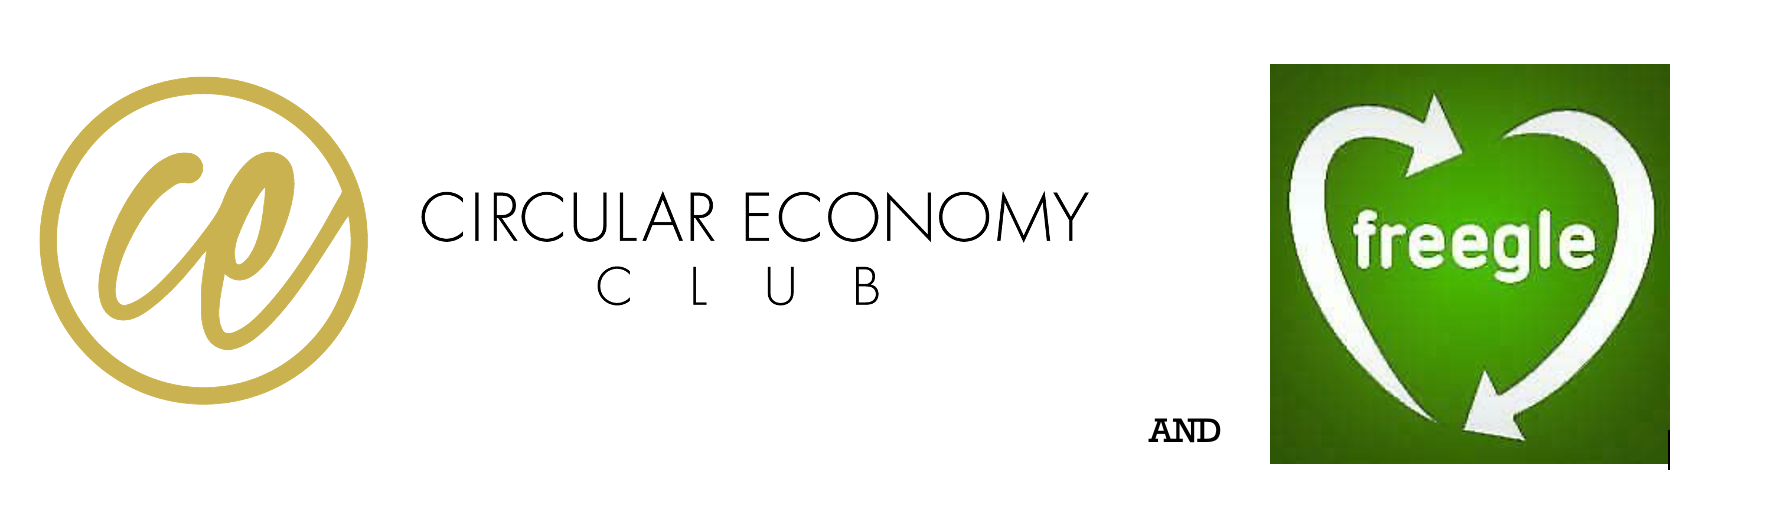 Circular Economy Club & Freegle